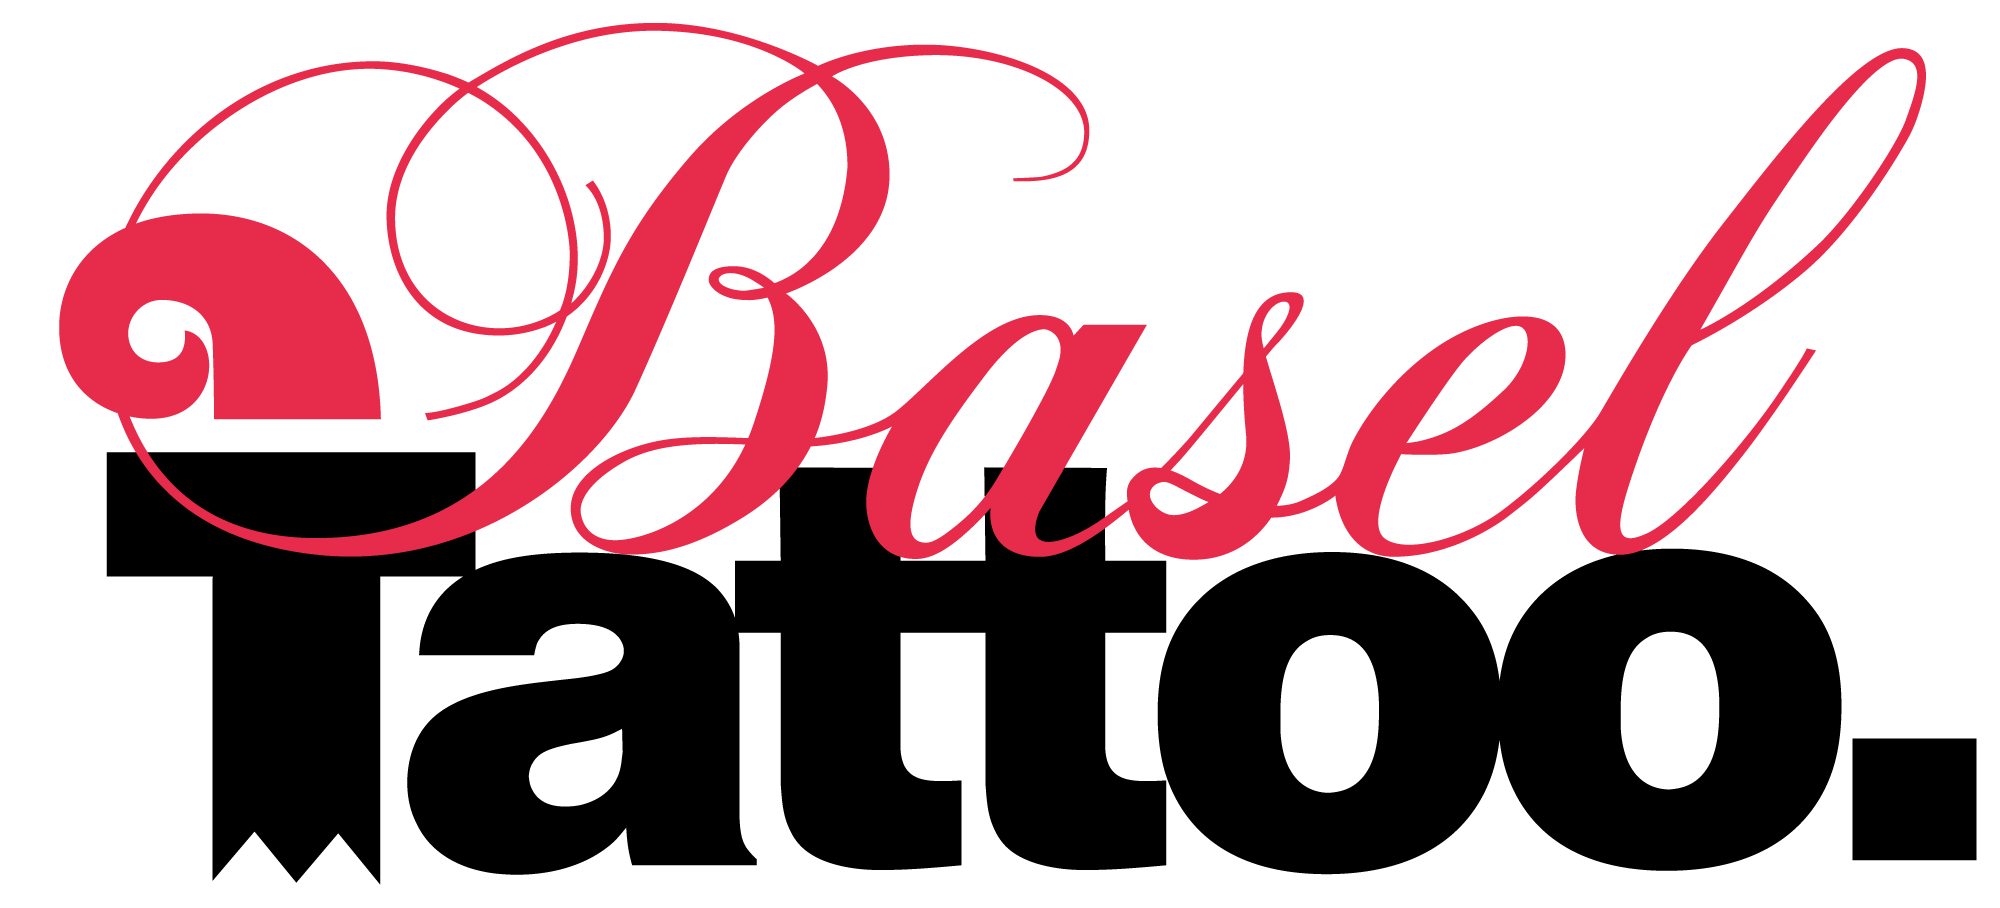 Basel Tattoo: Partner des BDV